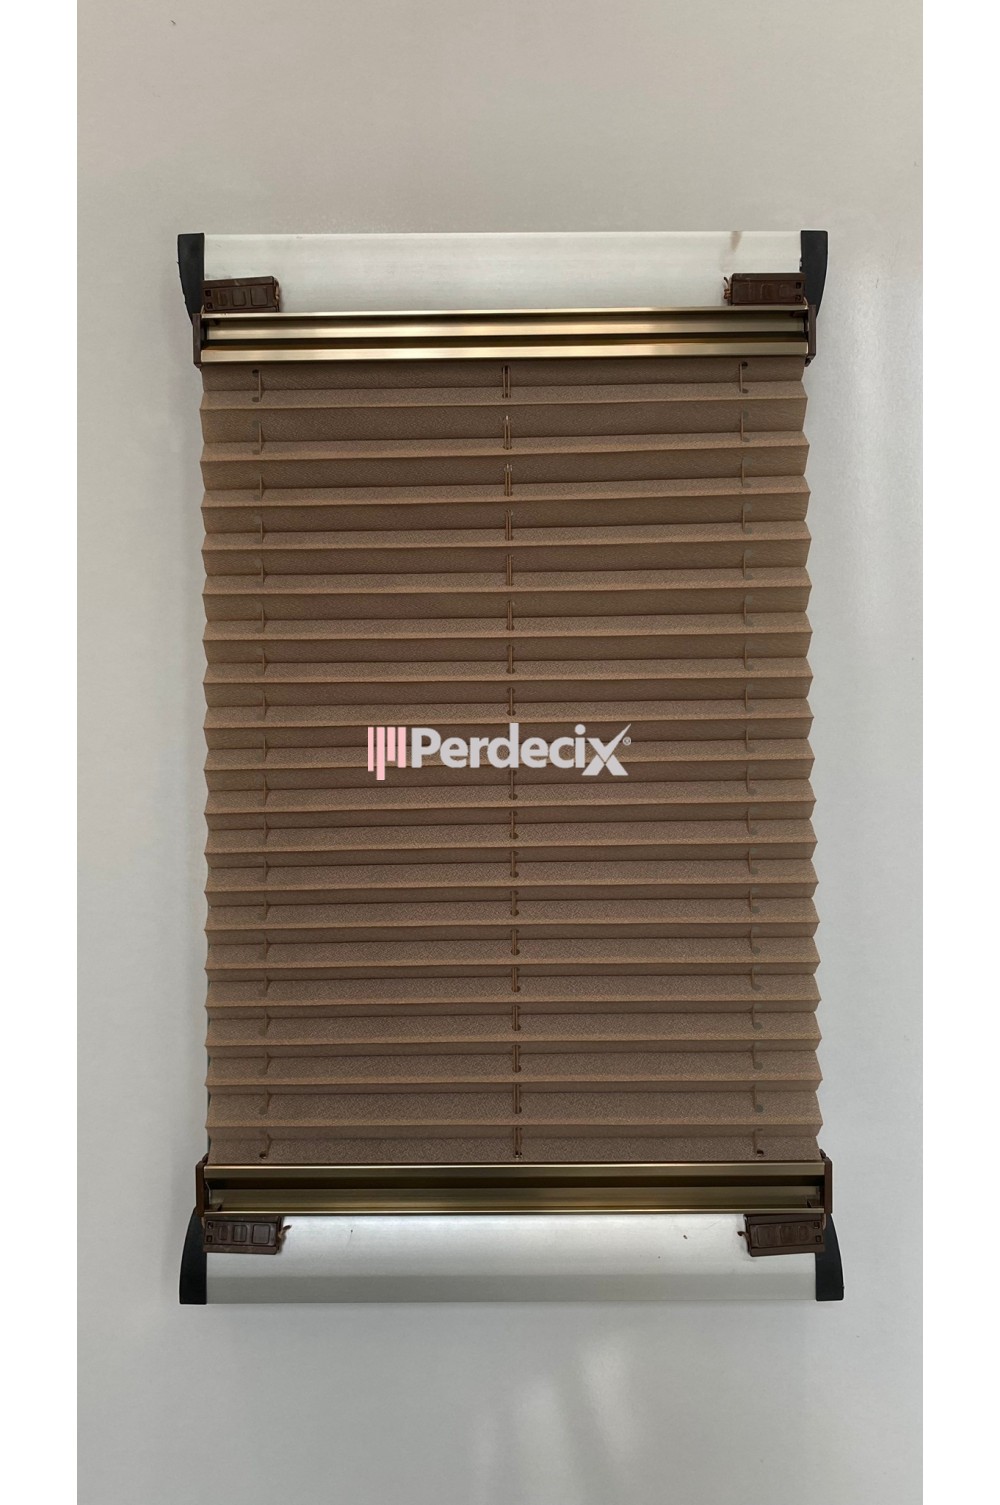 Perdecix Akordiyon Katlanır Cam balkon Plise Perde Ofis, Plastik Pencere Kapı ve Alüminyum Pencere ve Kapı perdesi Vizon Kumaş,Kahverengi Profil